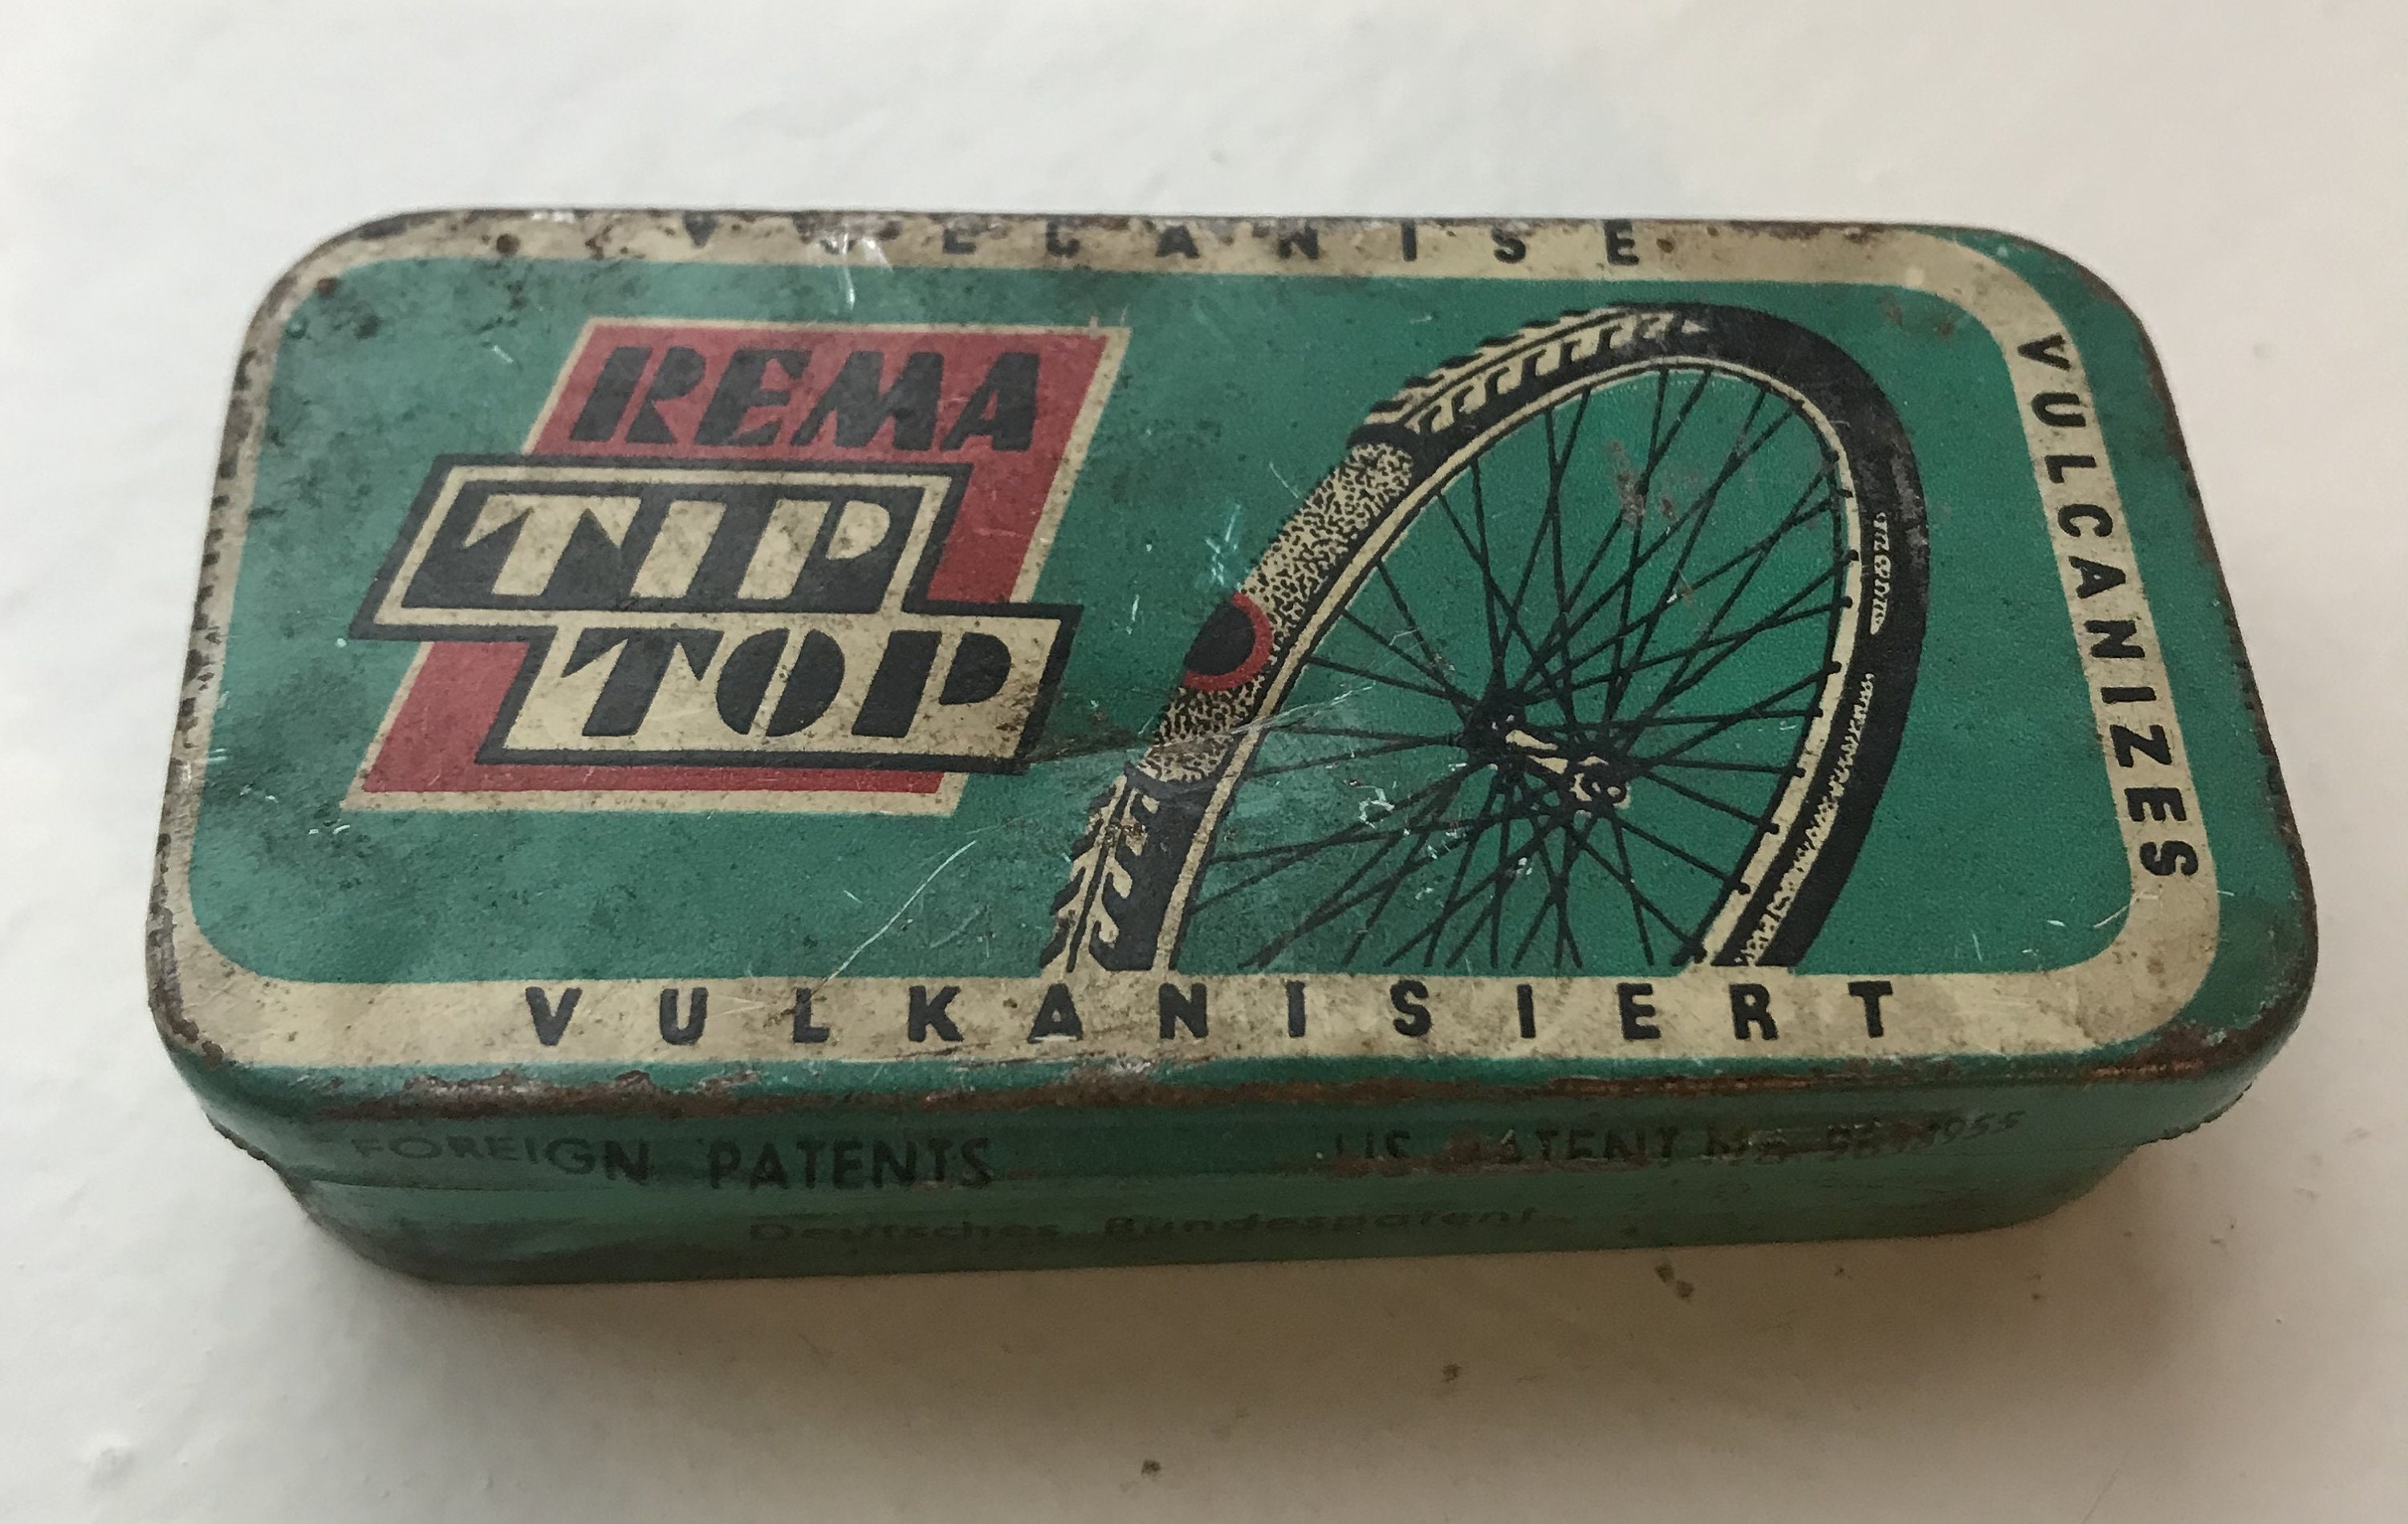 Vintage Rema Tip Top Vulkanisiert Bicycle Tire - Etsy